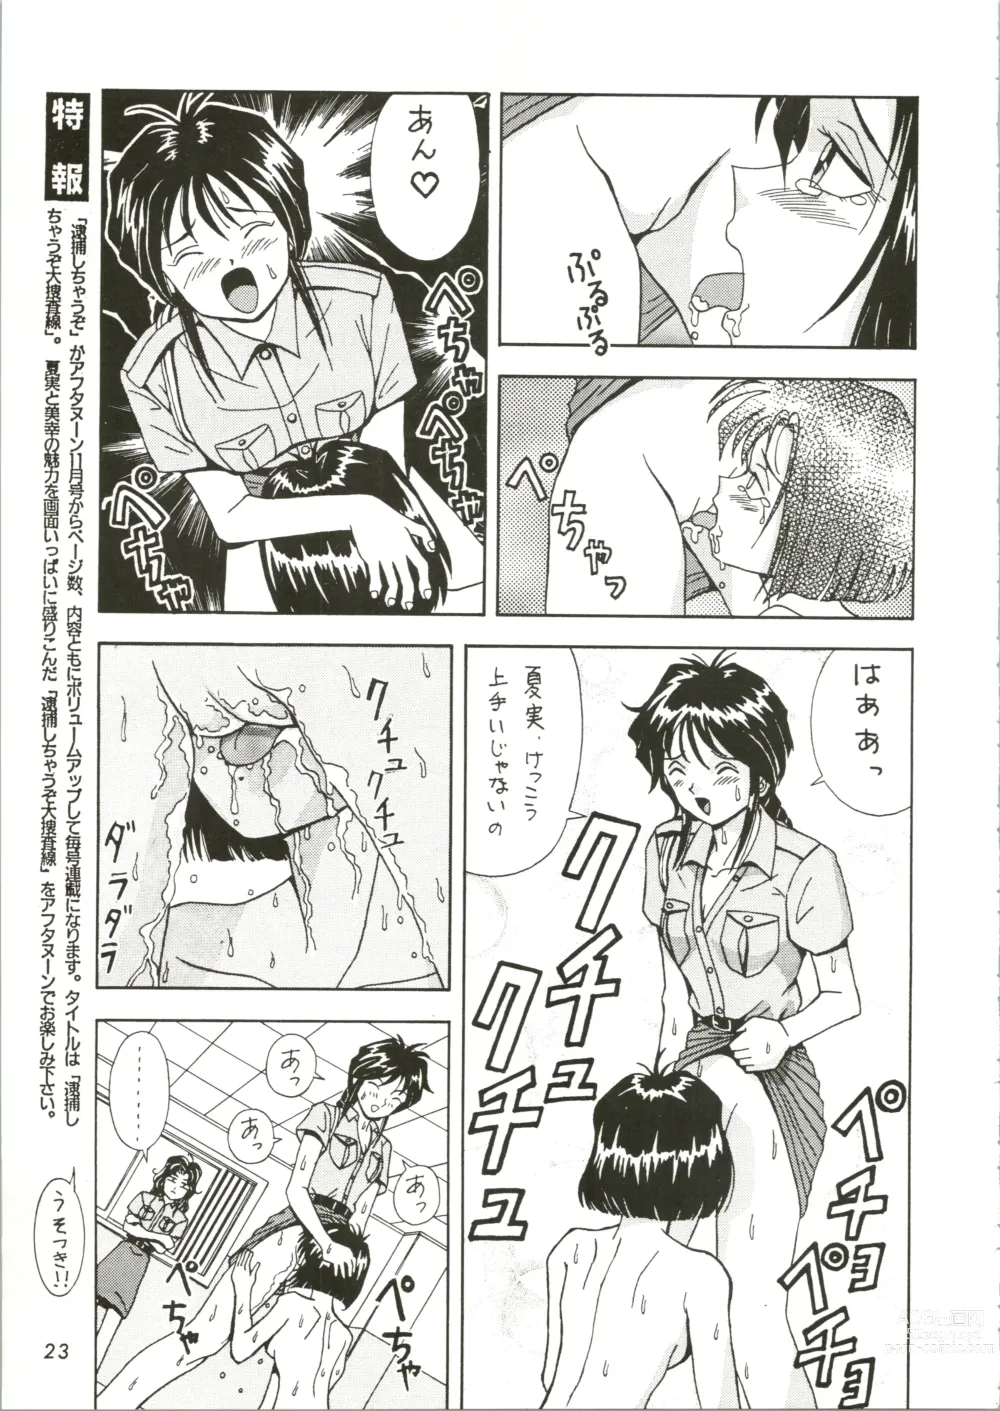 Page 23 of doujinshi FIRE!! CRACKER EX